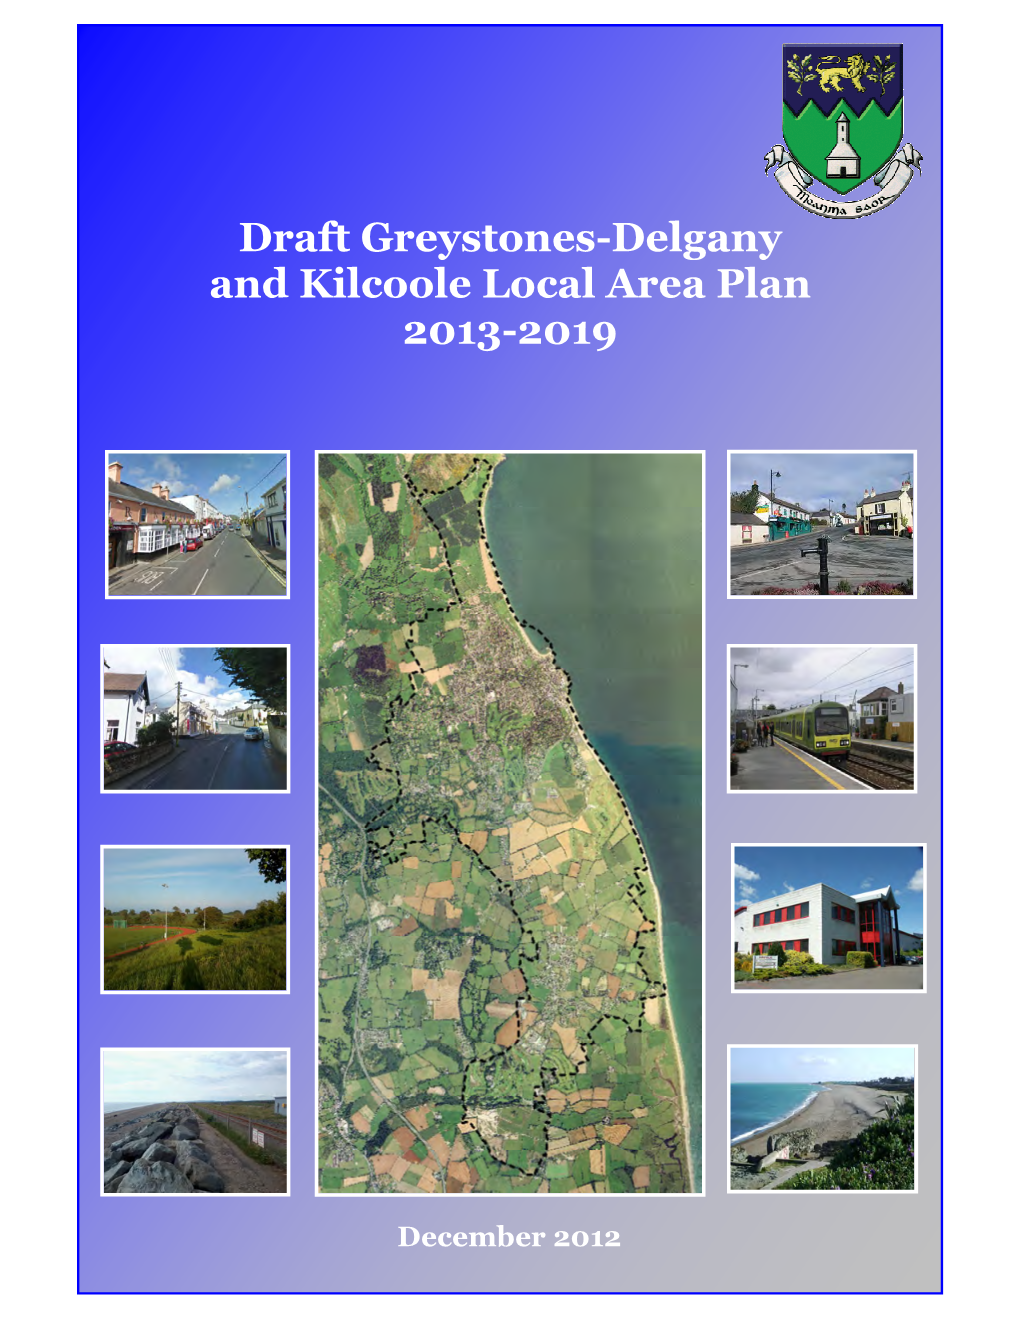 Draft Greystones-Delgany and Kilcoole Local Area Plan 2013-2019